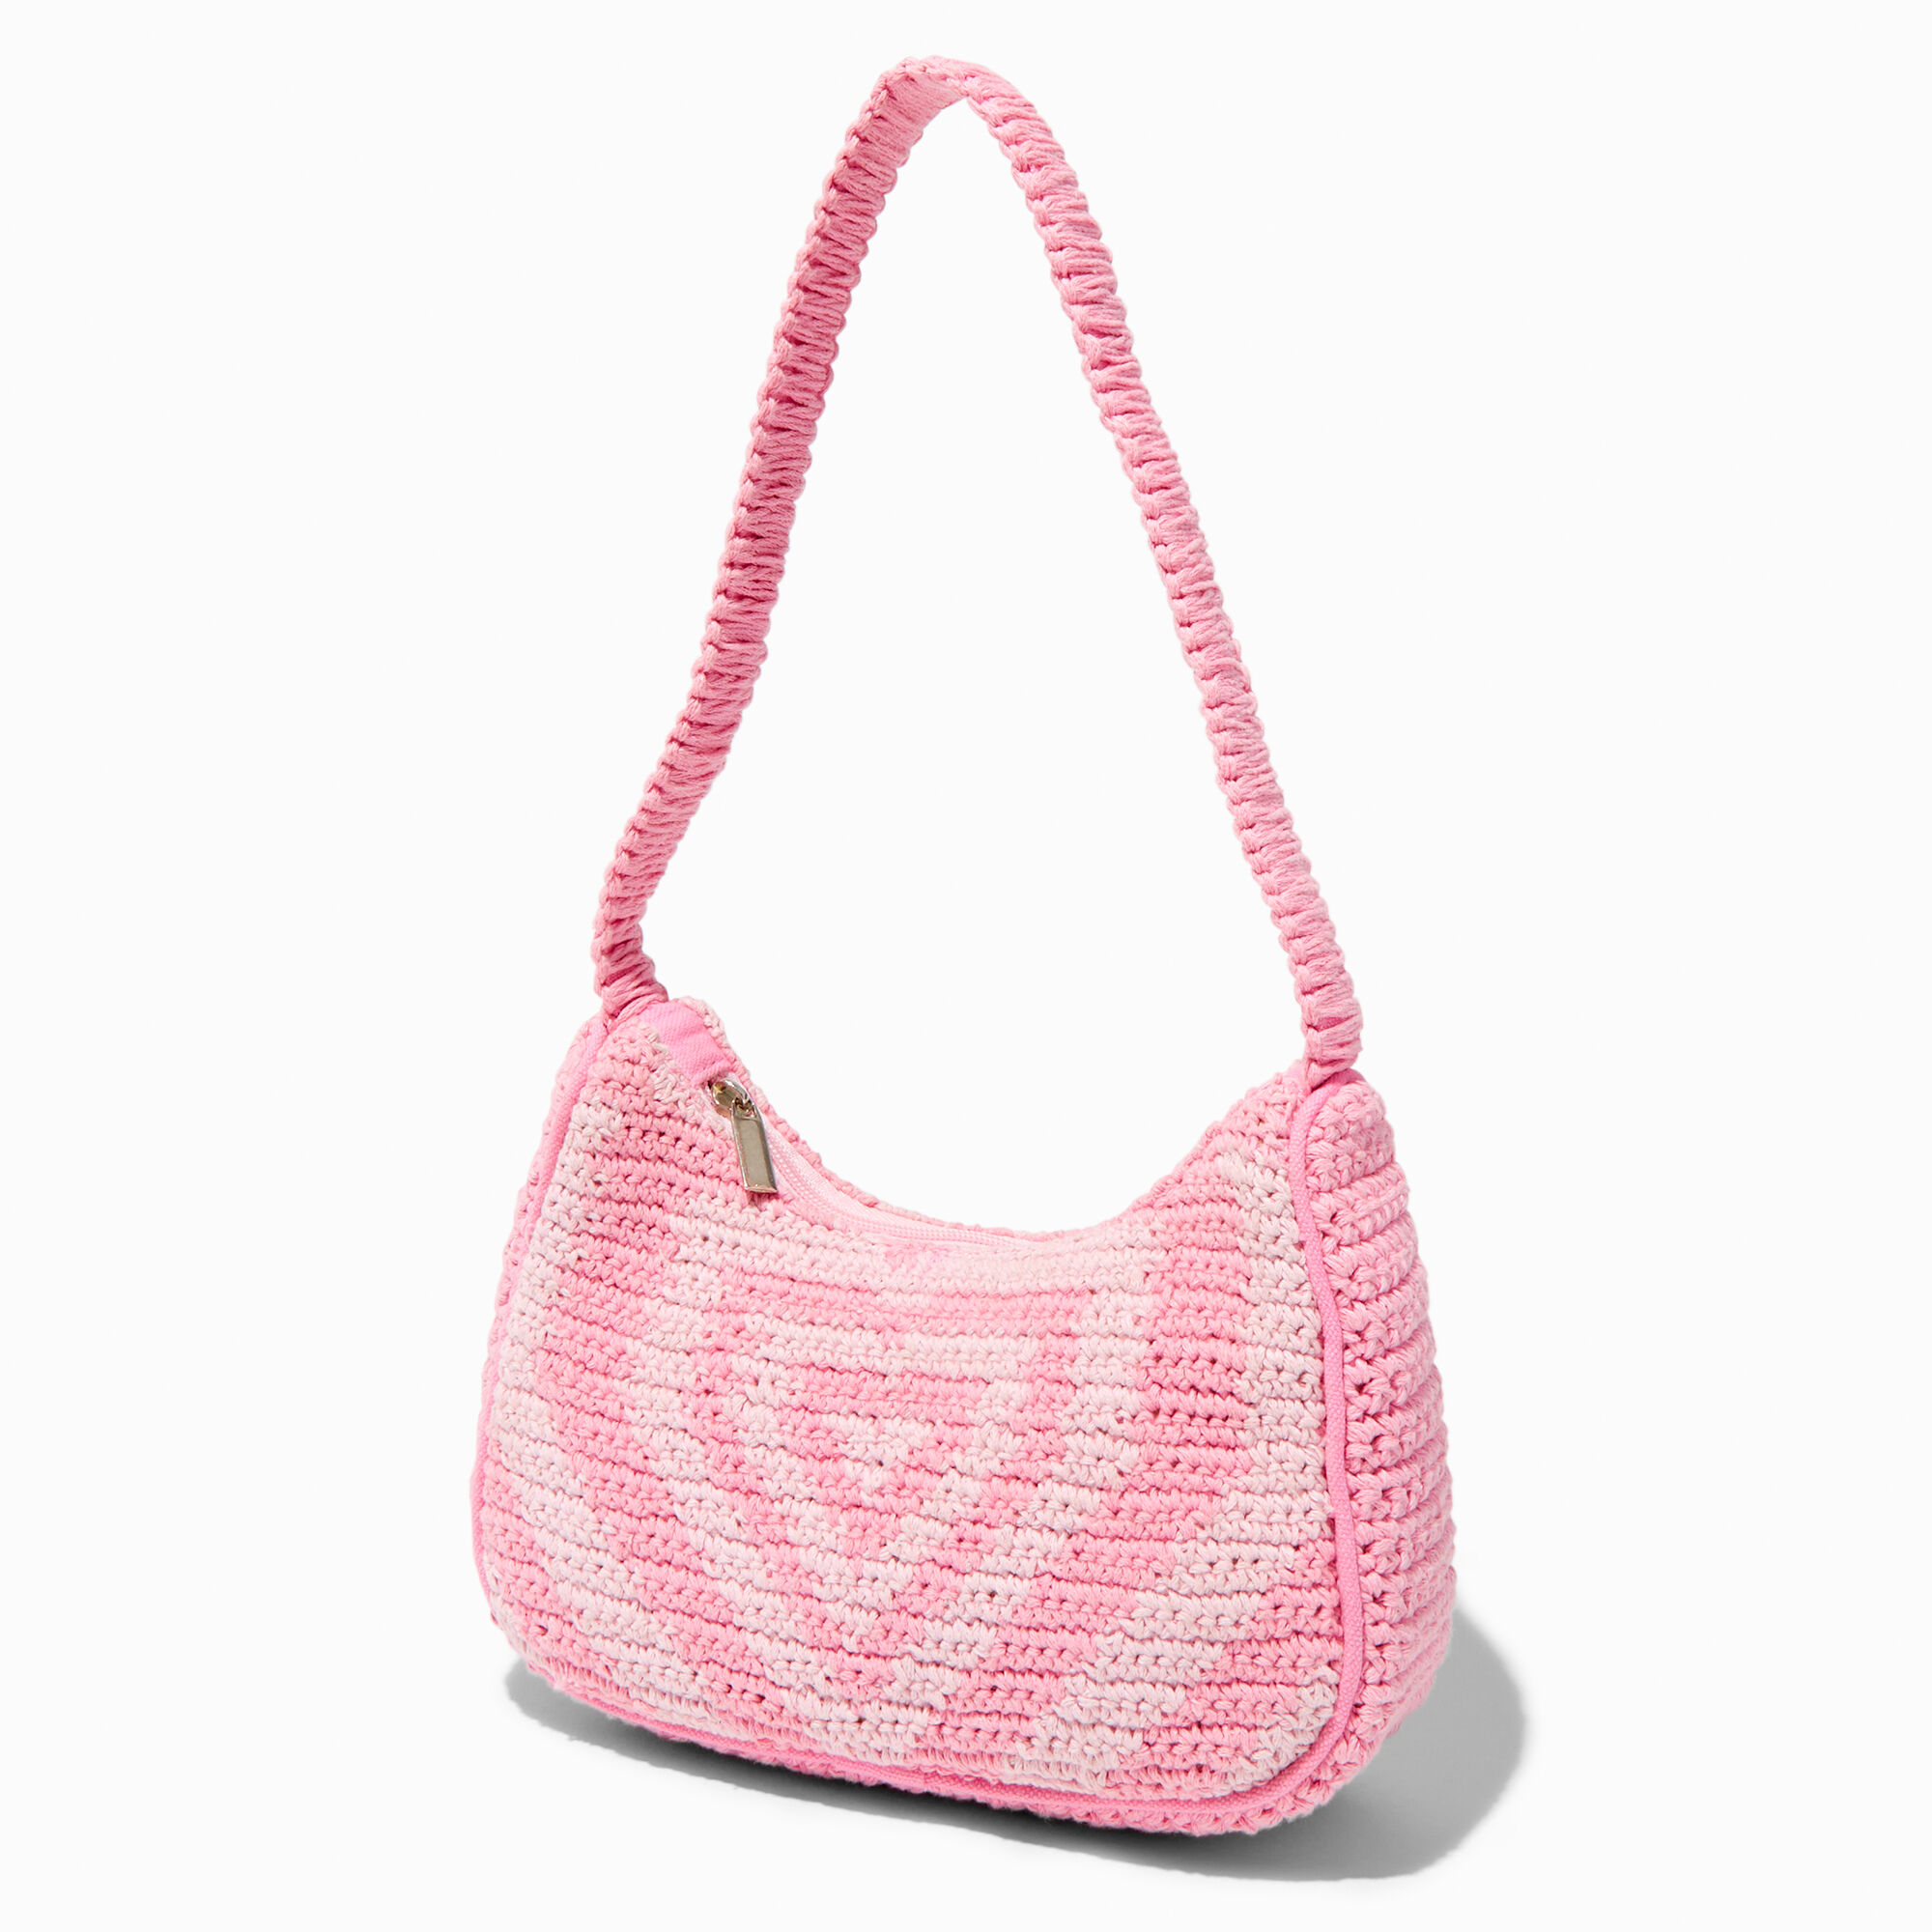 View Claires Crochet Heart Shield Shoulder Handbag Pink information